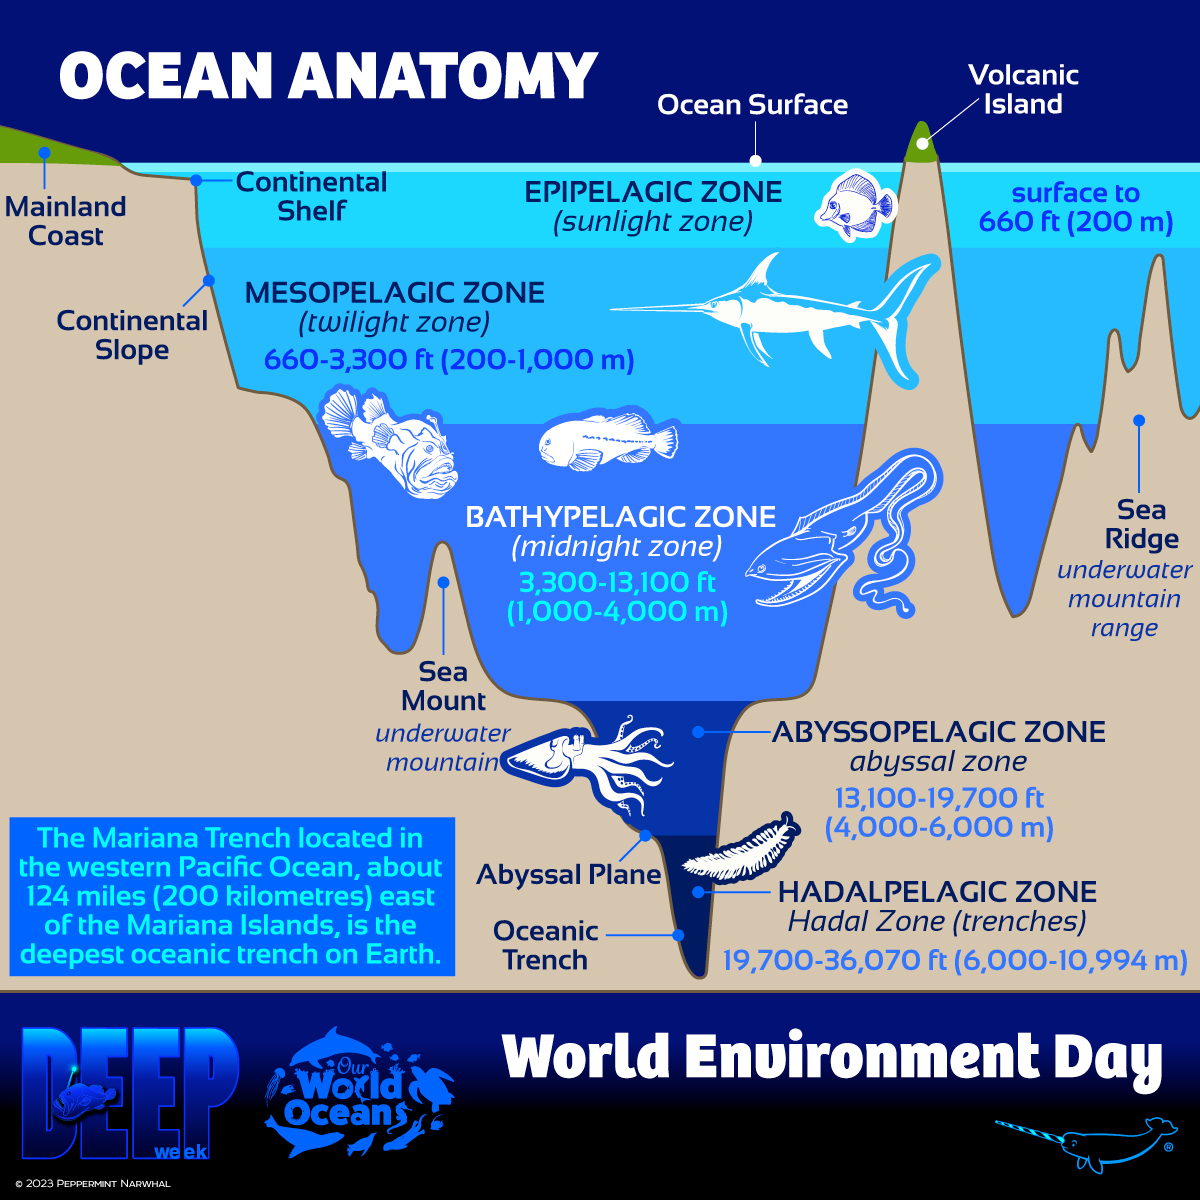 #WorldEnvironmentDay #OceanAnatomy
#DeepWeek #OurWorldOceansMonth

Endangered 5 #EnamelPins #Kickstarter tinyurl.com/2n8pe326

Shop #PeppermintNarwhal peppermintnarwhal.com 

#OurWorldOceans #OceanMonth #Ocean #OceanZones